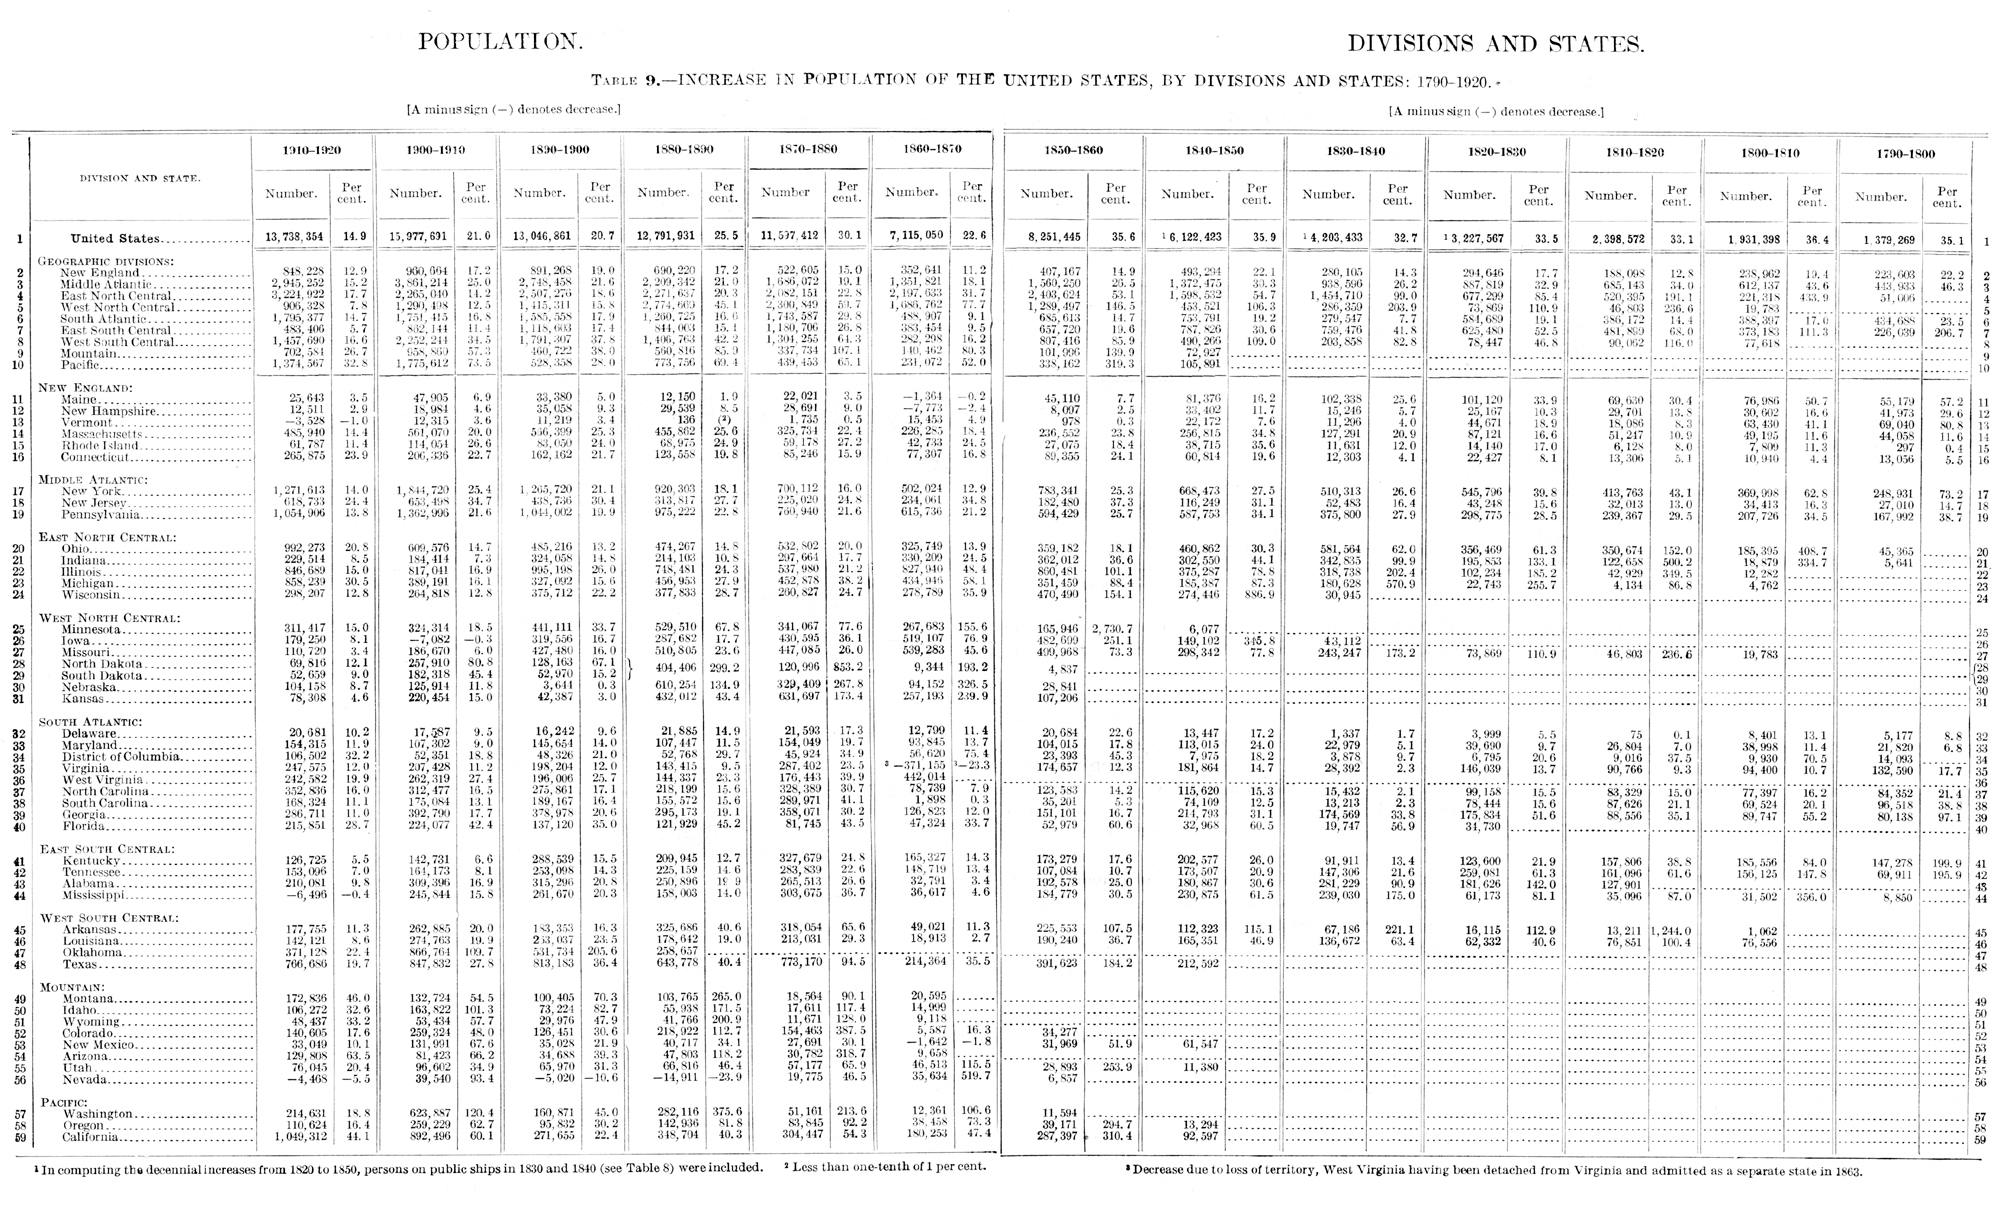 1920 Oklahoma Census, Volume 1, Table 9